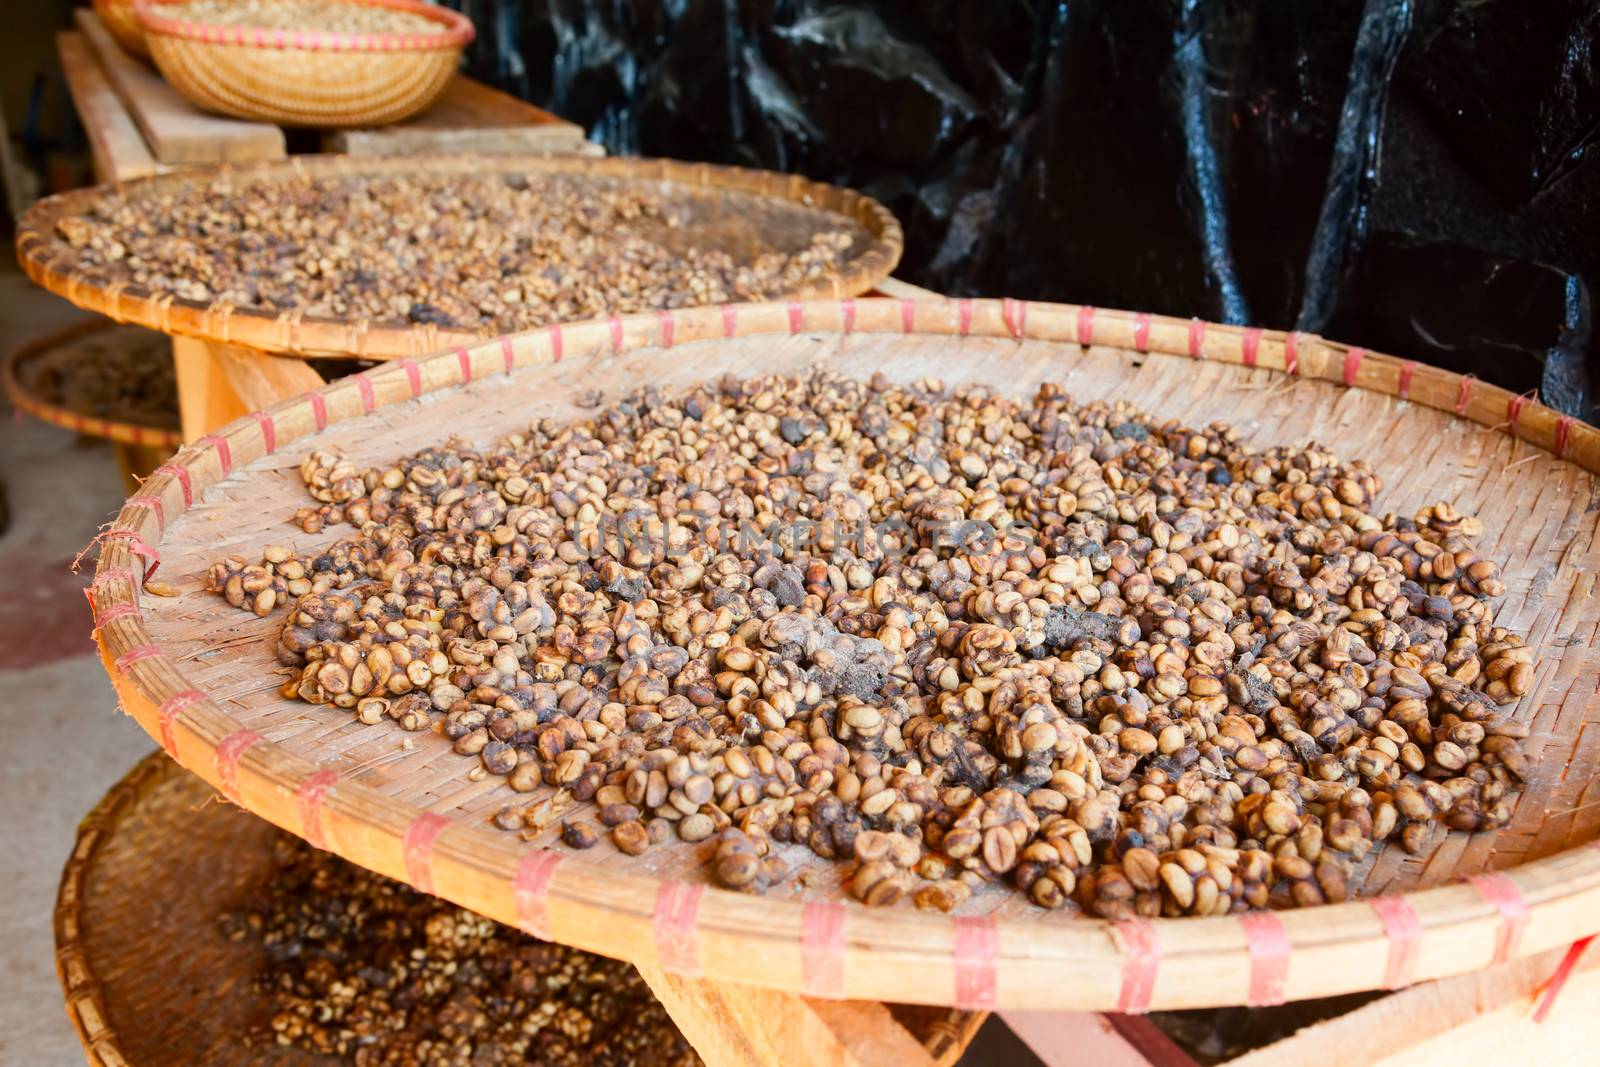 Kopi Luwak coffee beans by naumoid